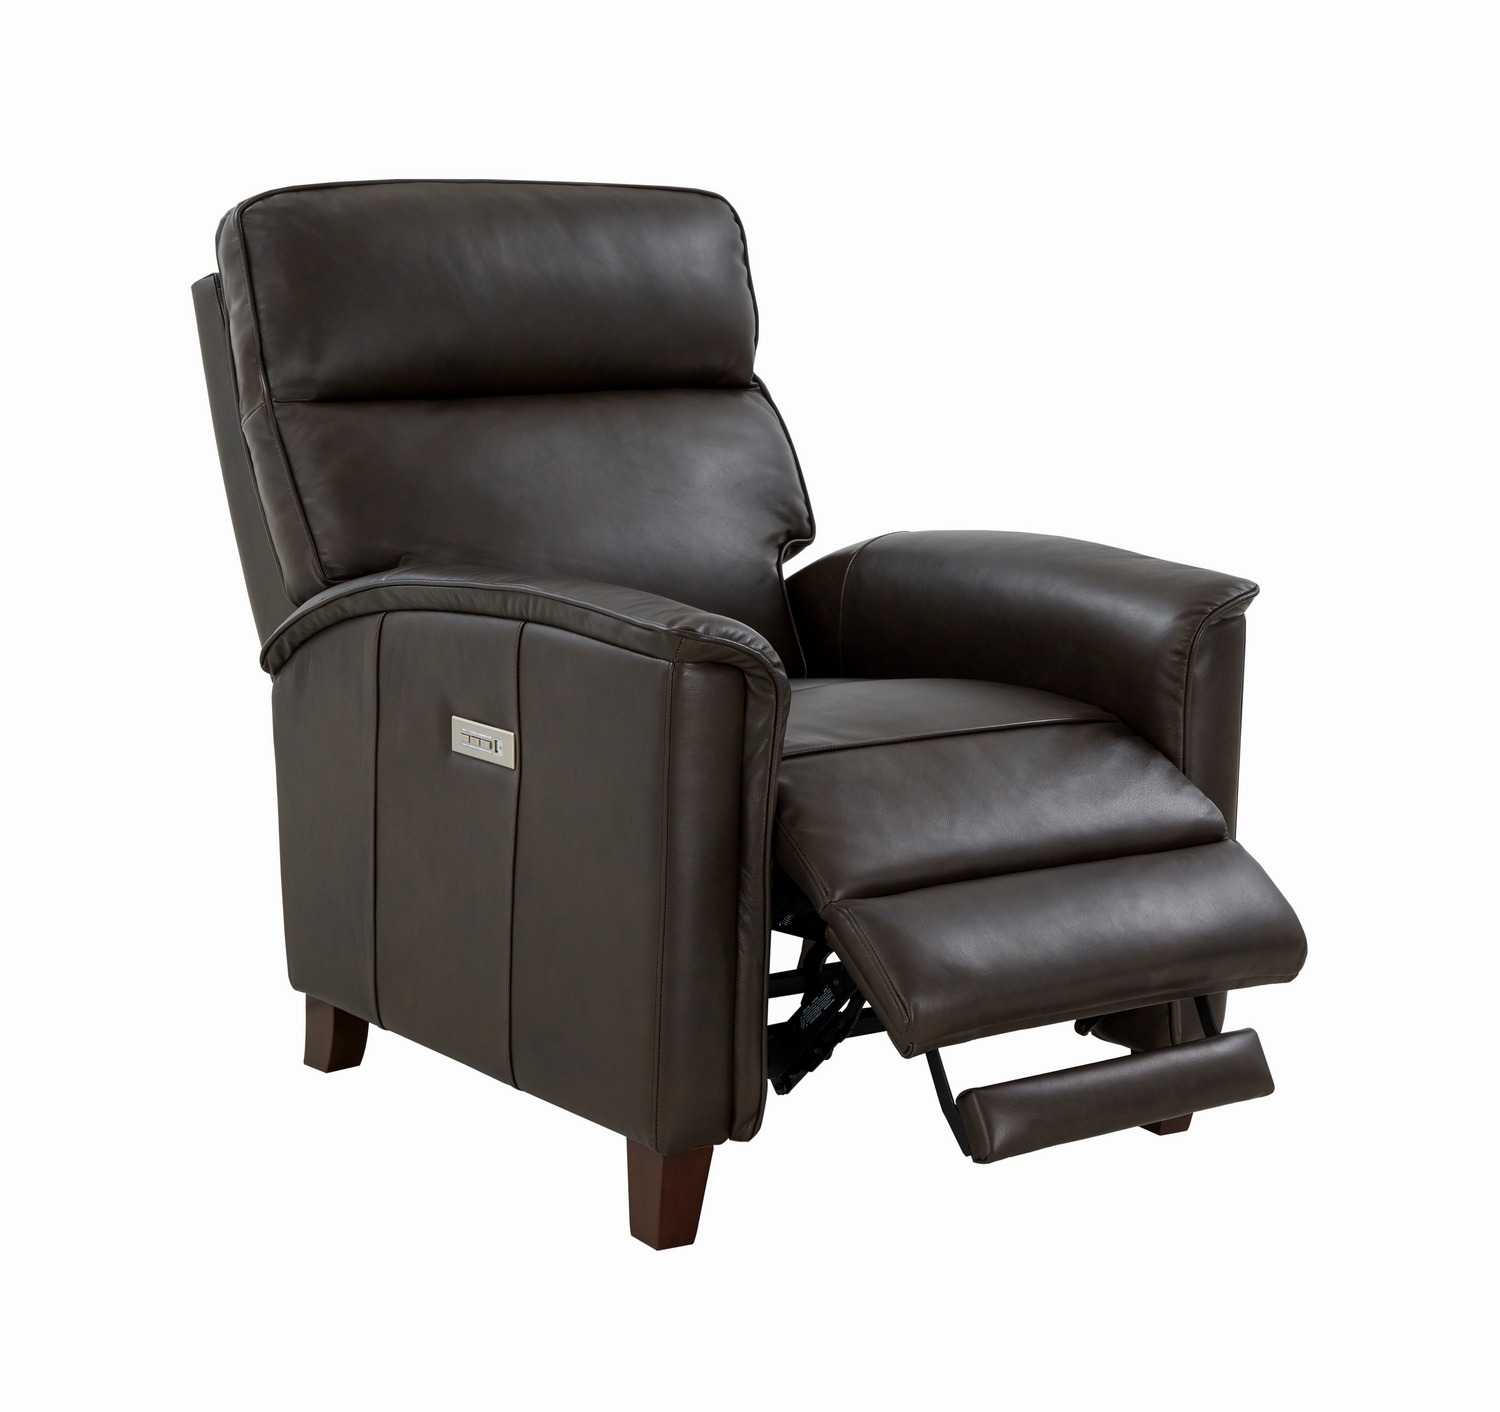 Barcalounger Jonathan Zero Gravity Power Recliner Chair with Power Head Rest and Lumbar - Bennington Chestnut/All Leather